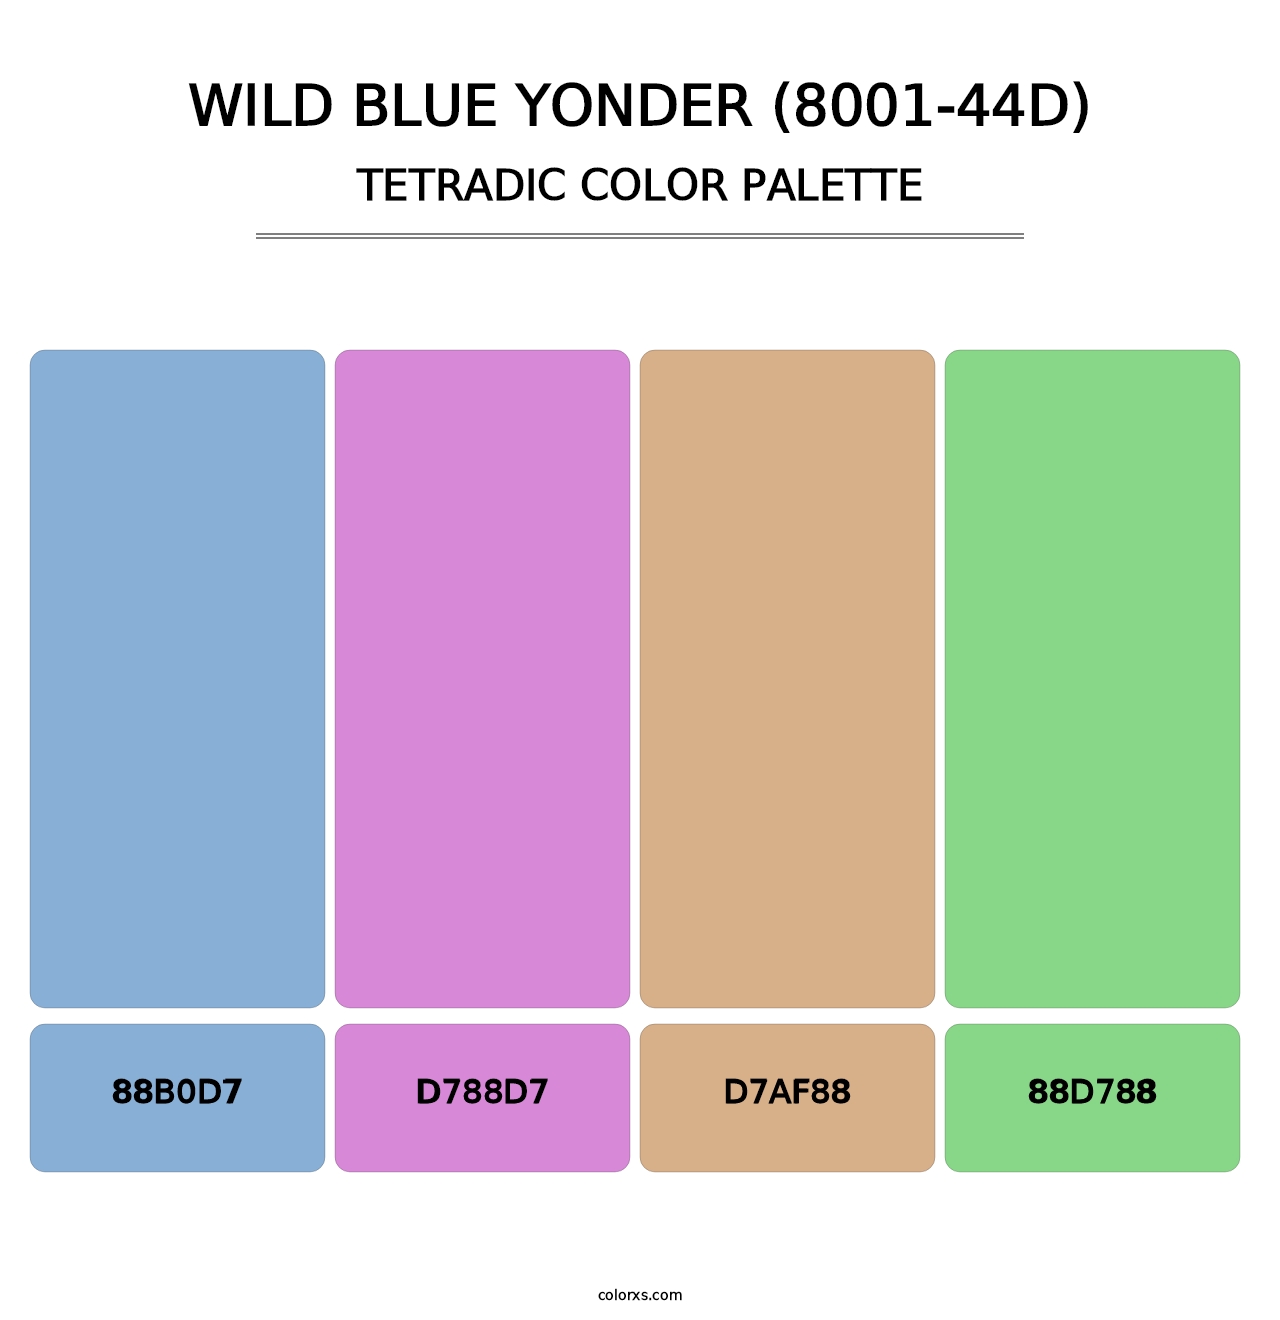 Wild Blue Yonder (8001-44D) - Tetradic Color Palette